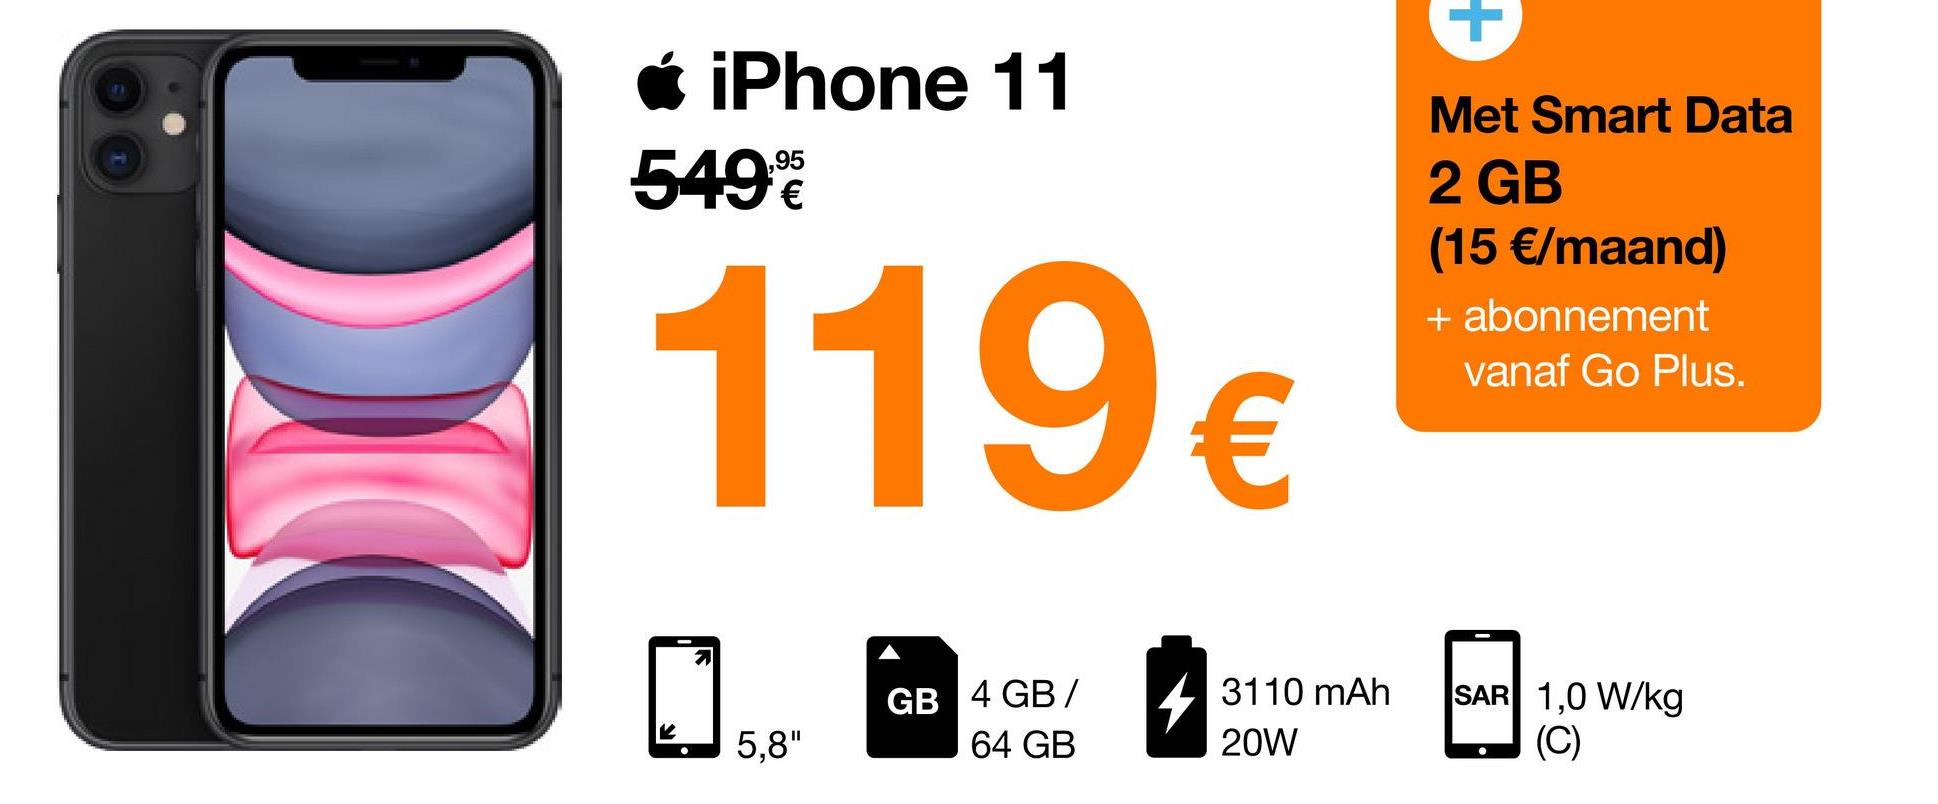 * iPhone 11
,95
549
119€
201
GB 4 GB/
64 GB
K
5,8"
3110 mAh
20W
+
Met Smart Data
2 GB
(15 €/maand)
+ abonnement
vanaf Go Plus.
SAR 1,0 W/kg
(C)